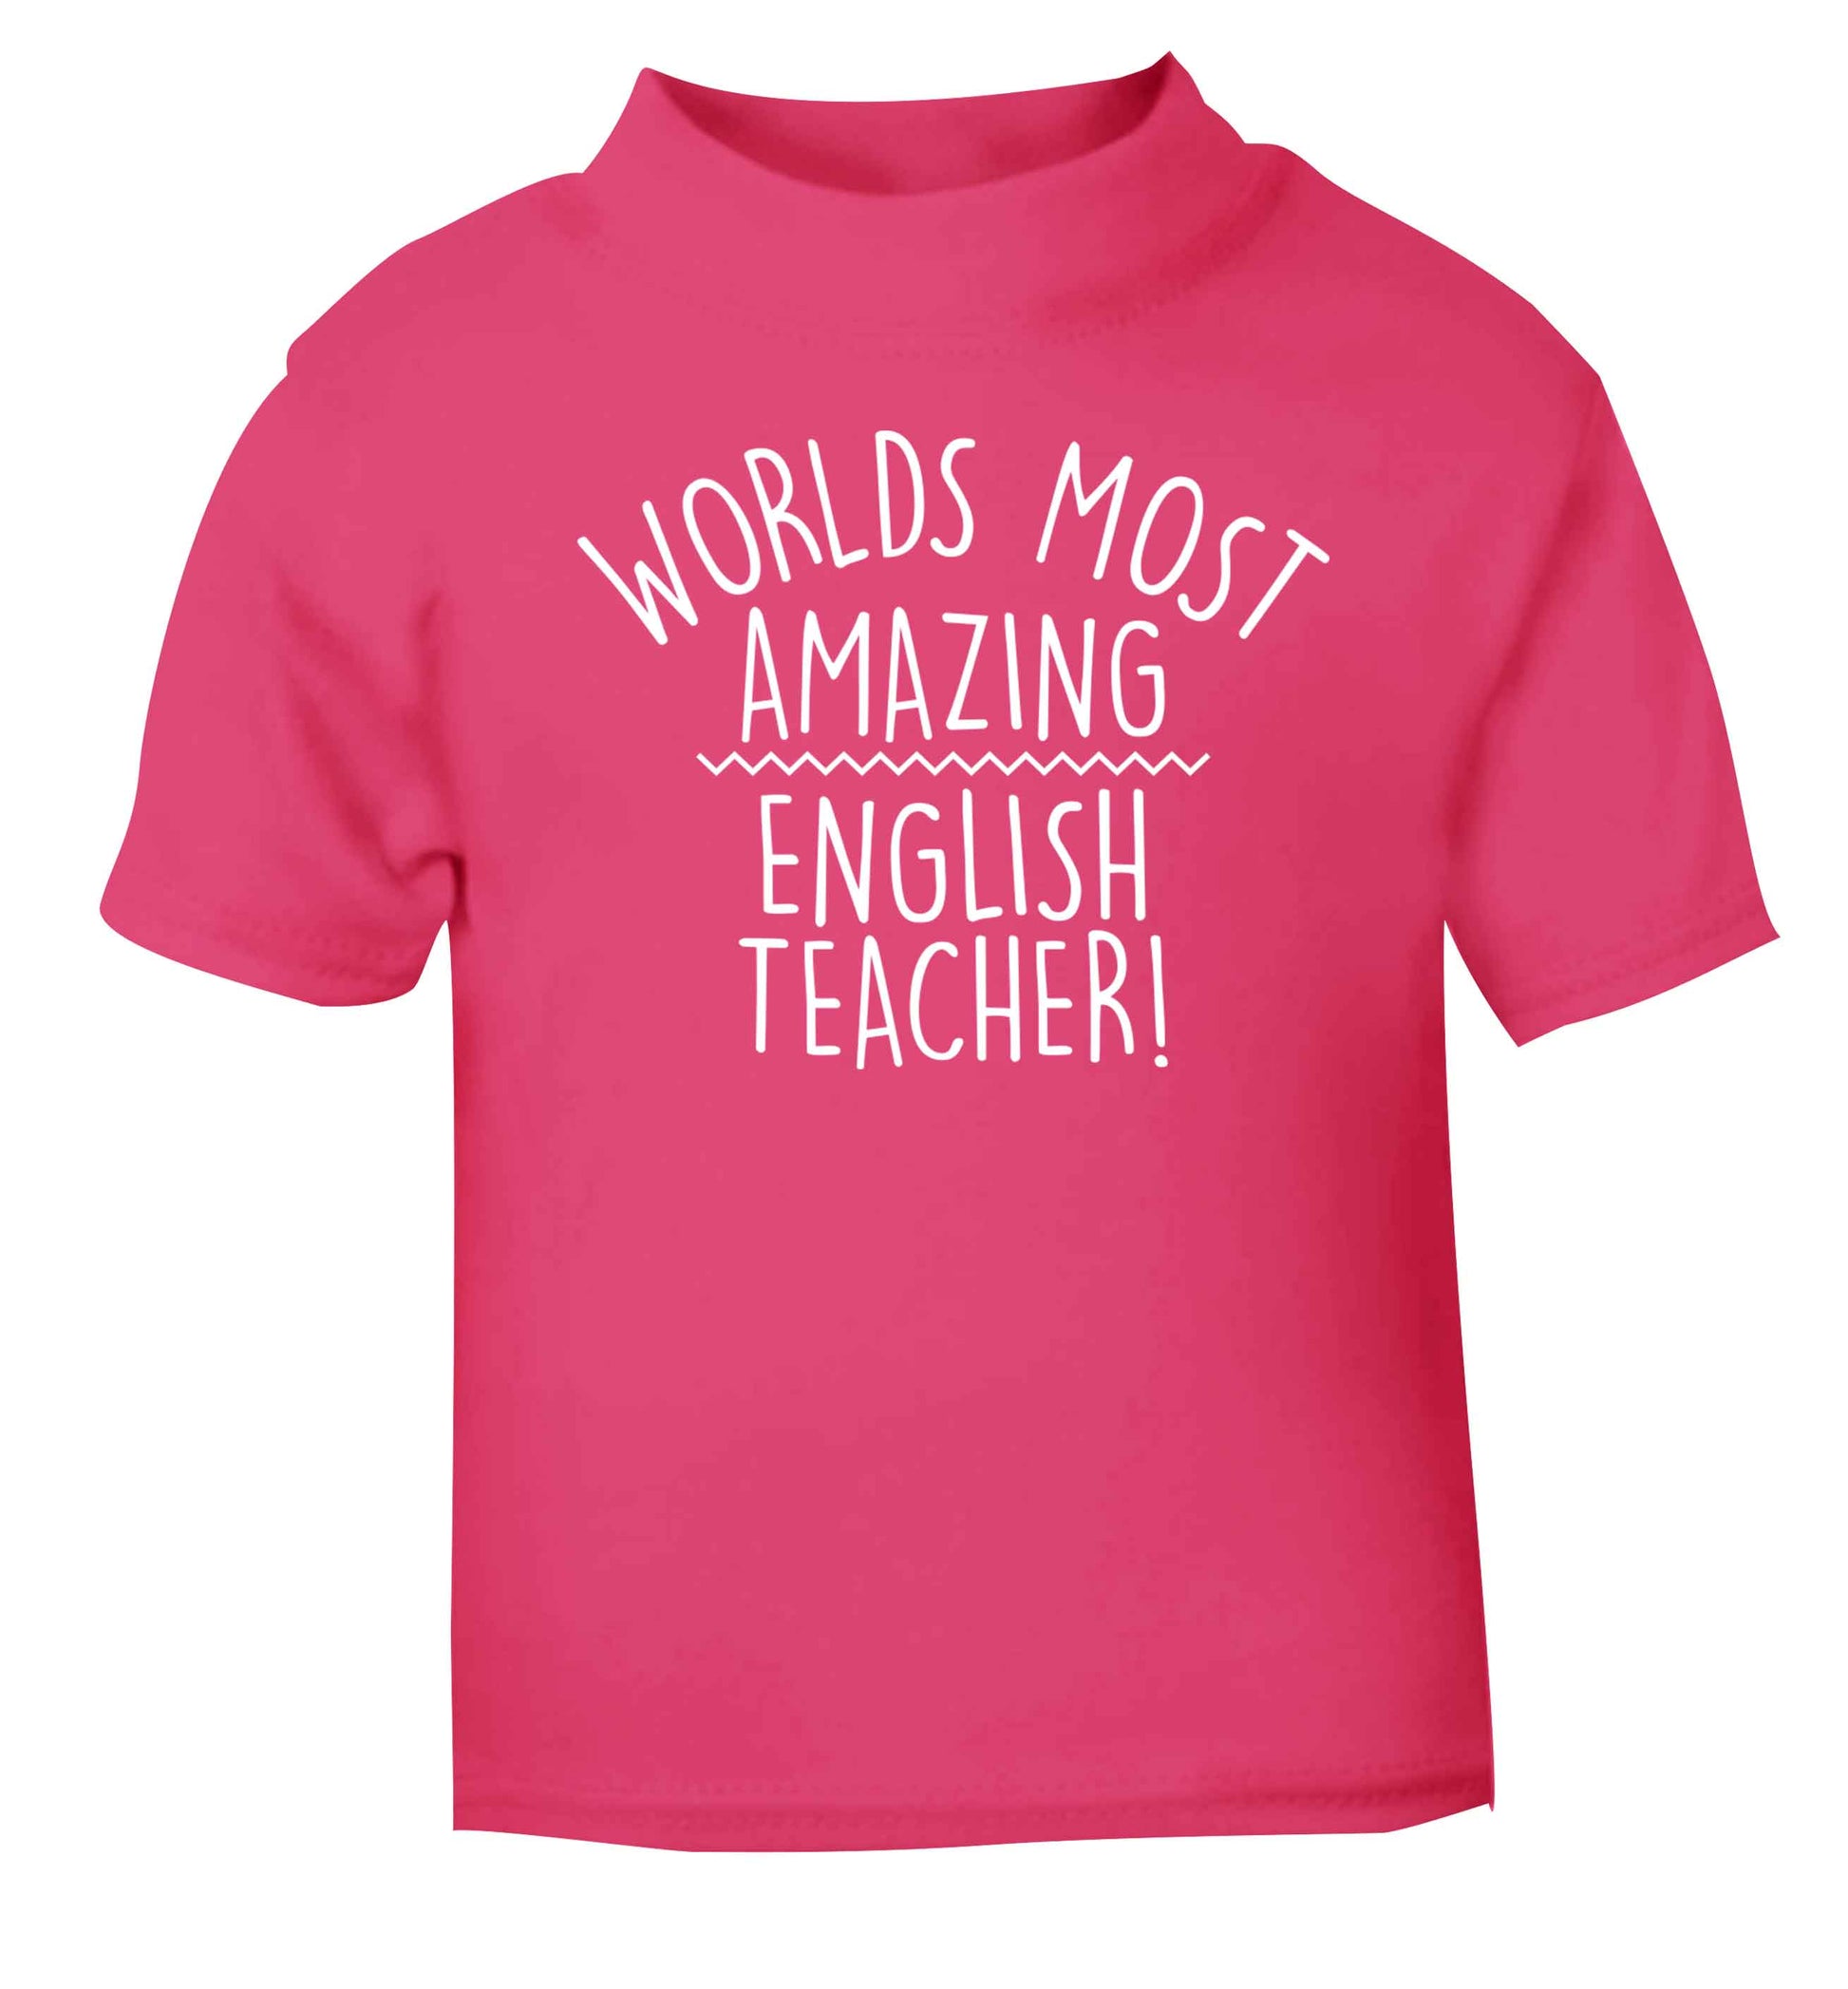 Worlds most amazing English teacher pink baby toddler Tshirt 2 Years